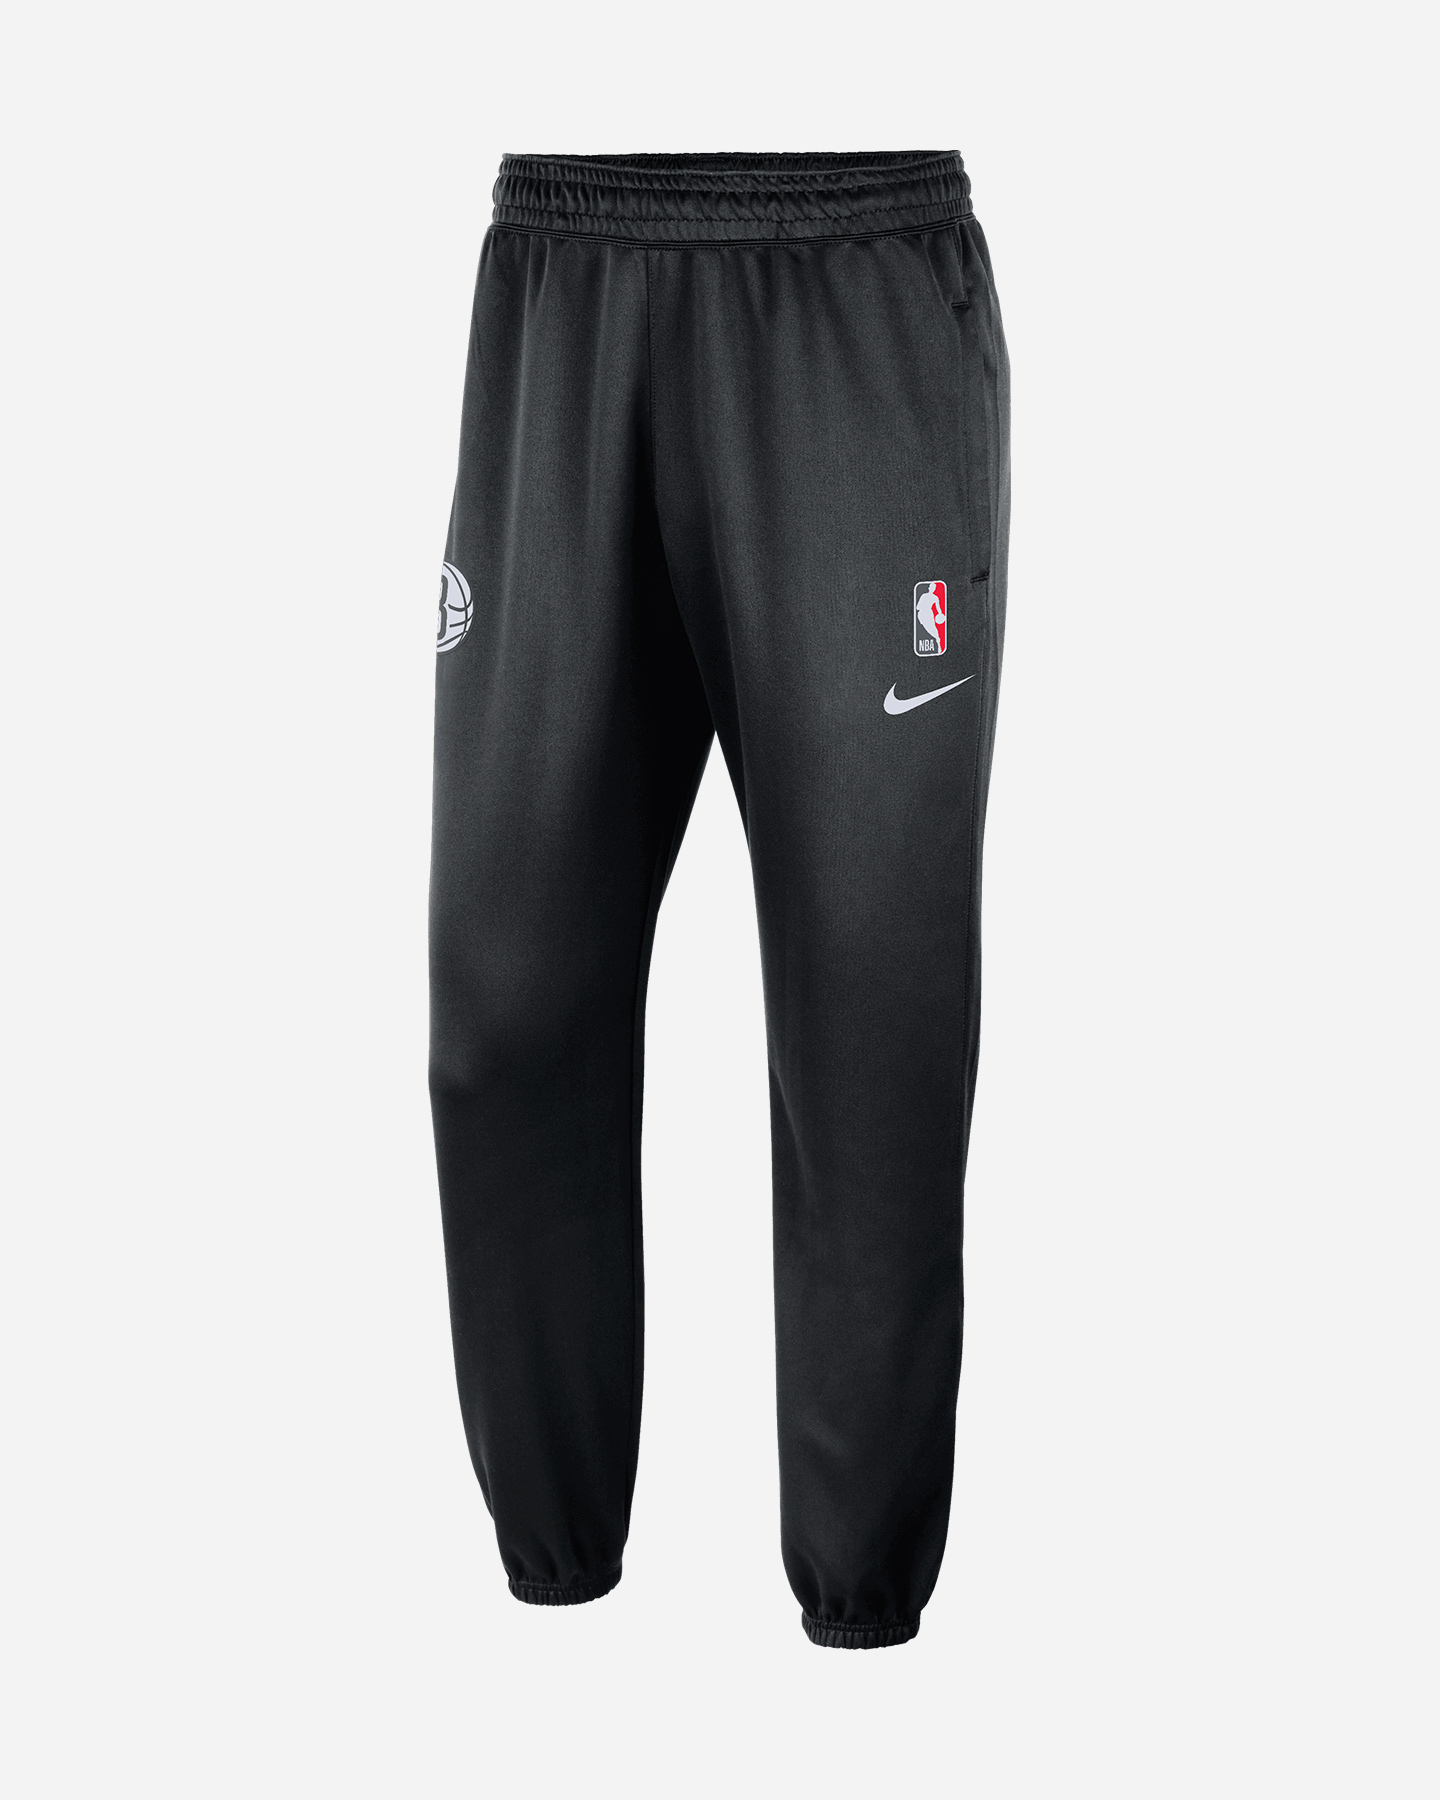 Image of Nike Nba Dri-fitspotlight Brooklyn Nets M - Abbigliamento Basket - Uomo